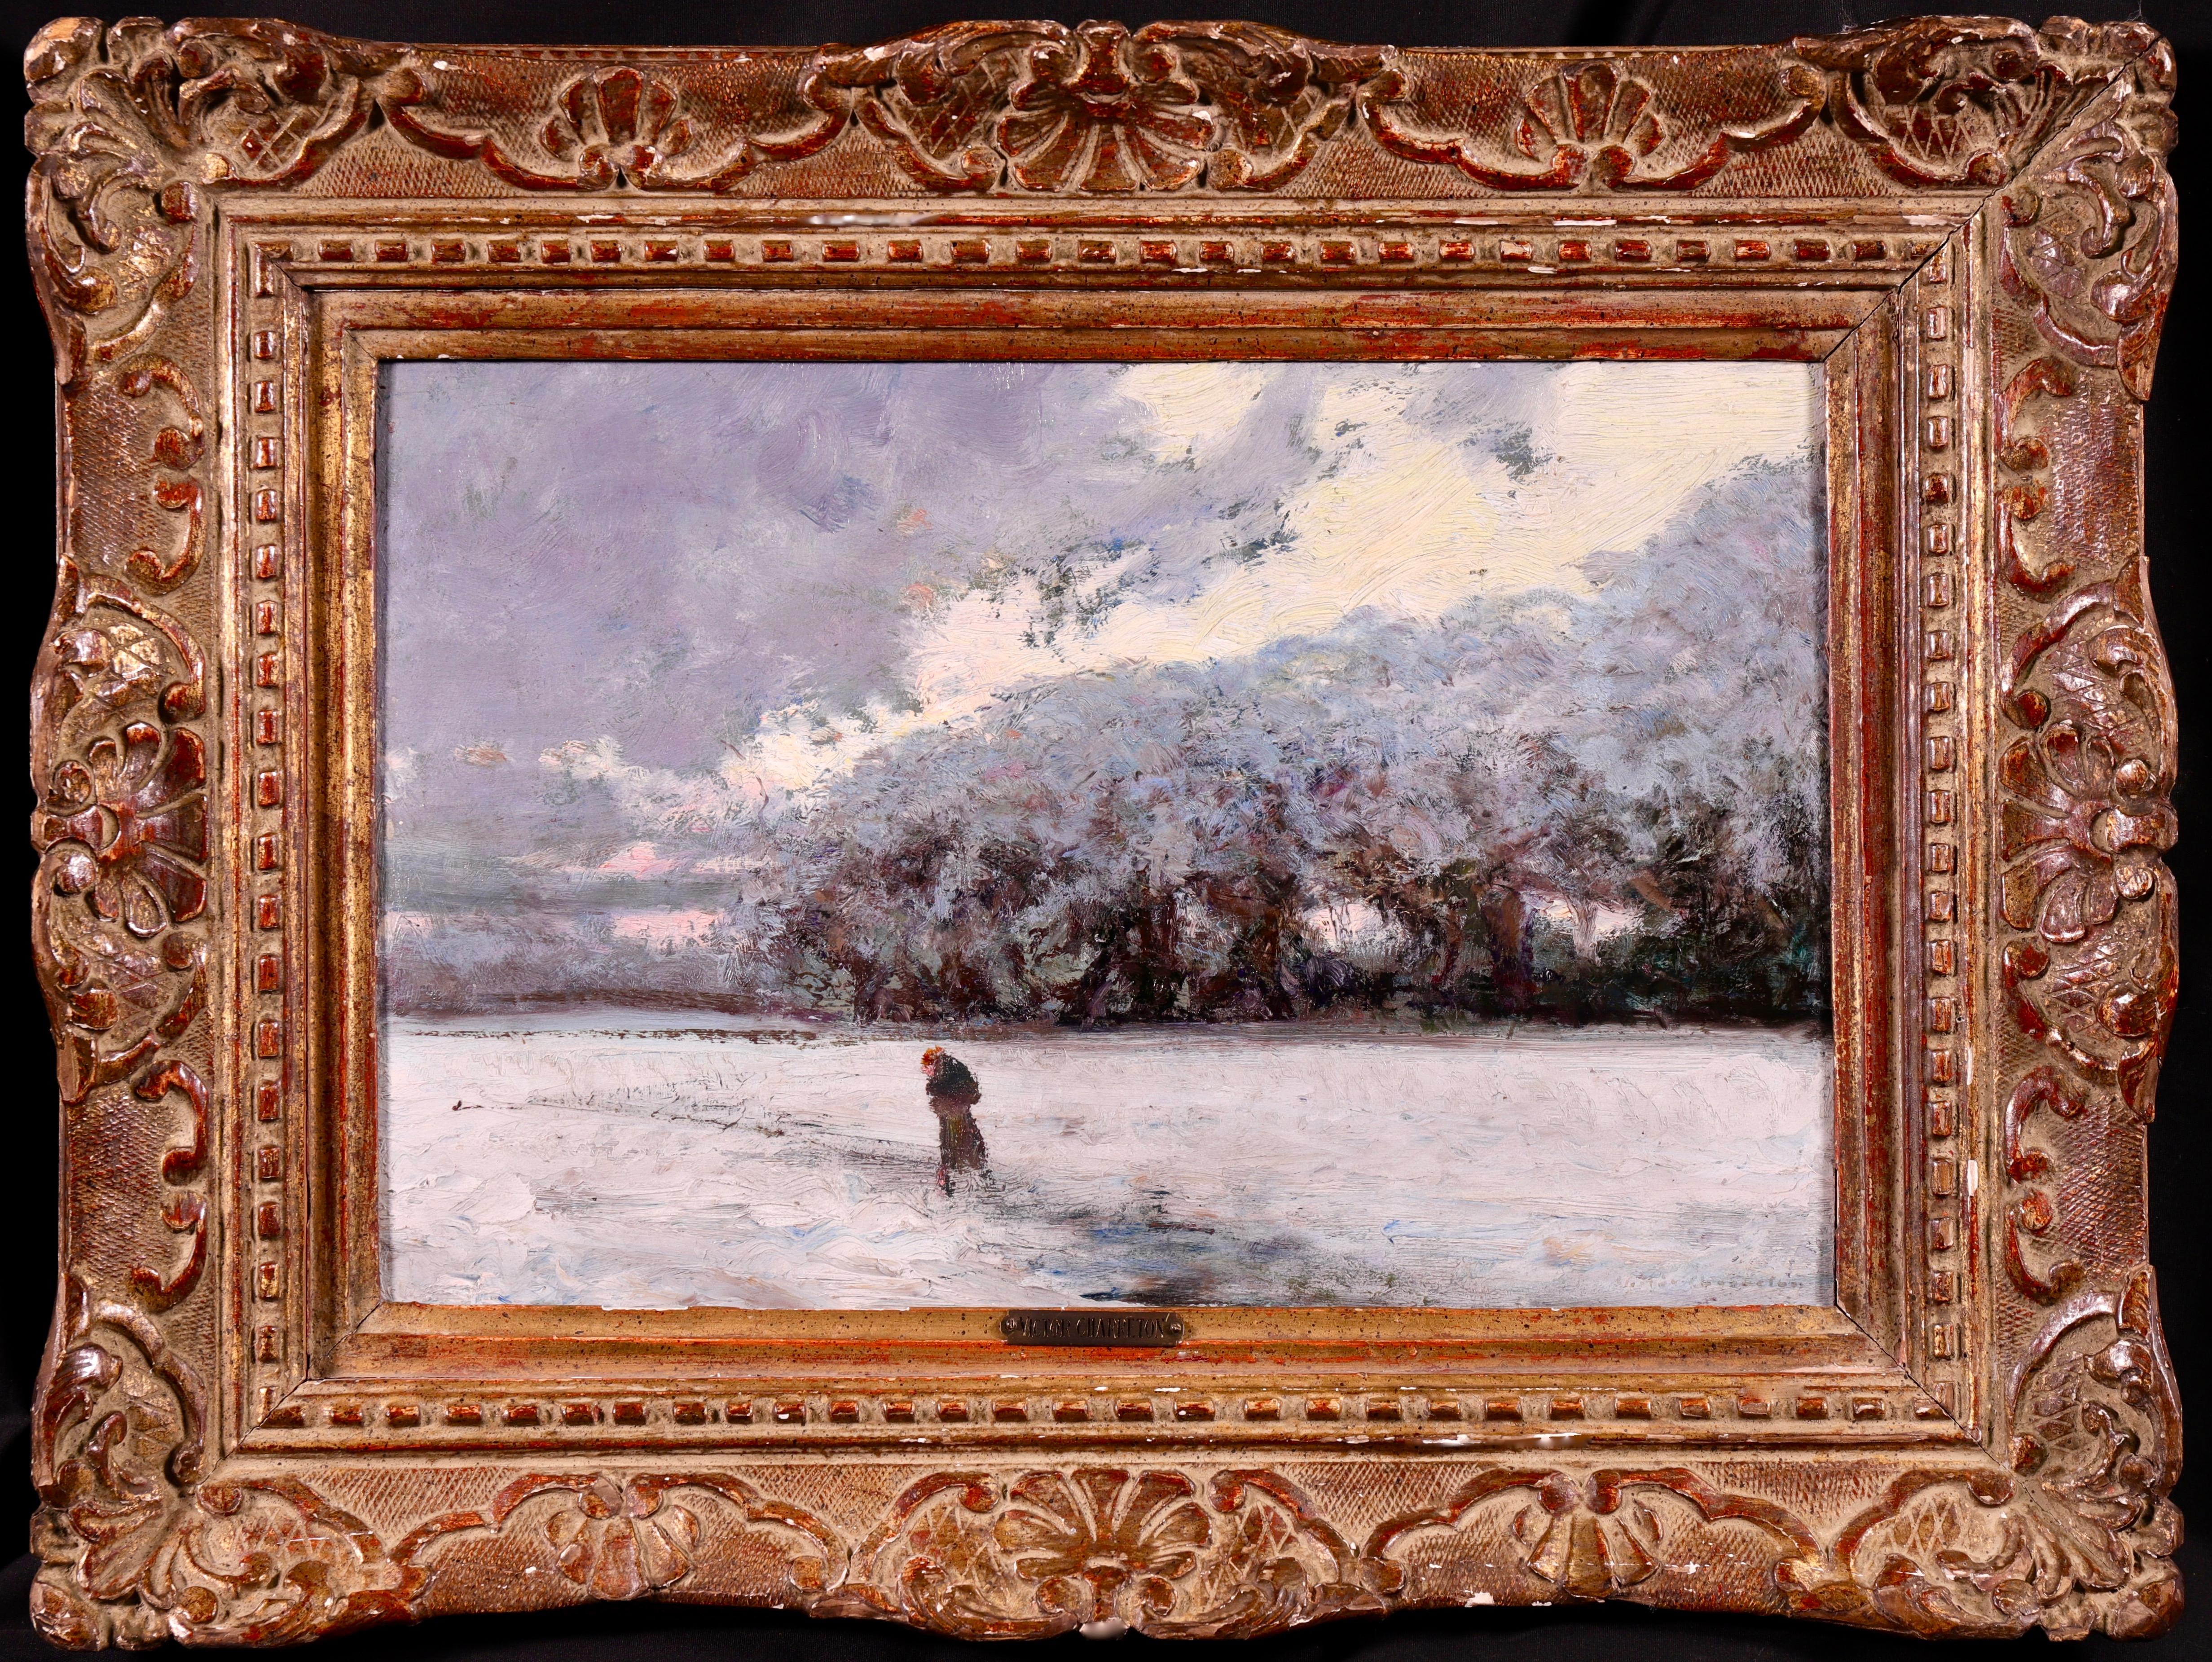 La Neige - Early 20th Century Oil, Figure in Winter Snow Landscape by Charreton - Painting by Victor Charreton